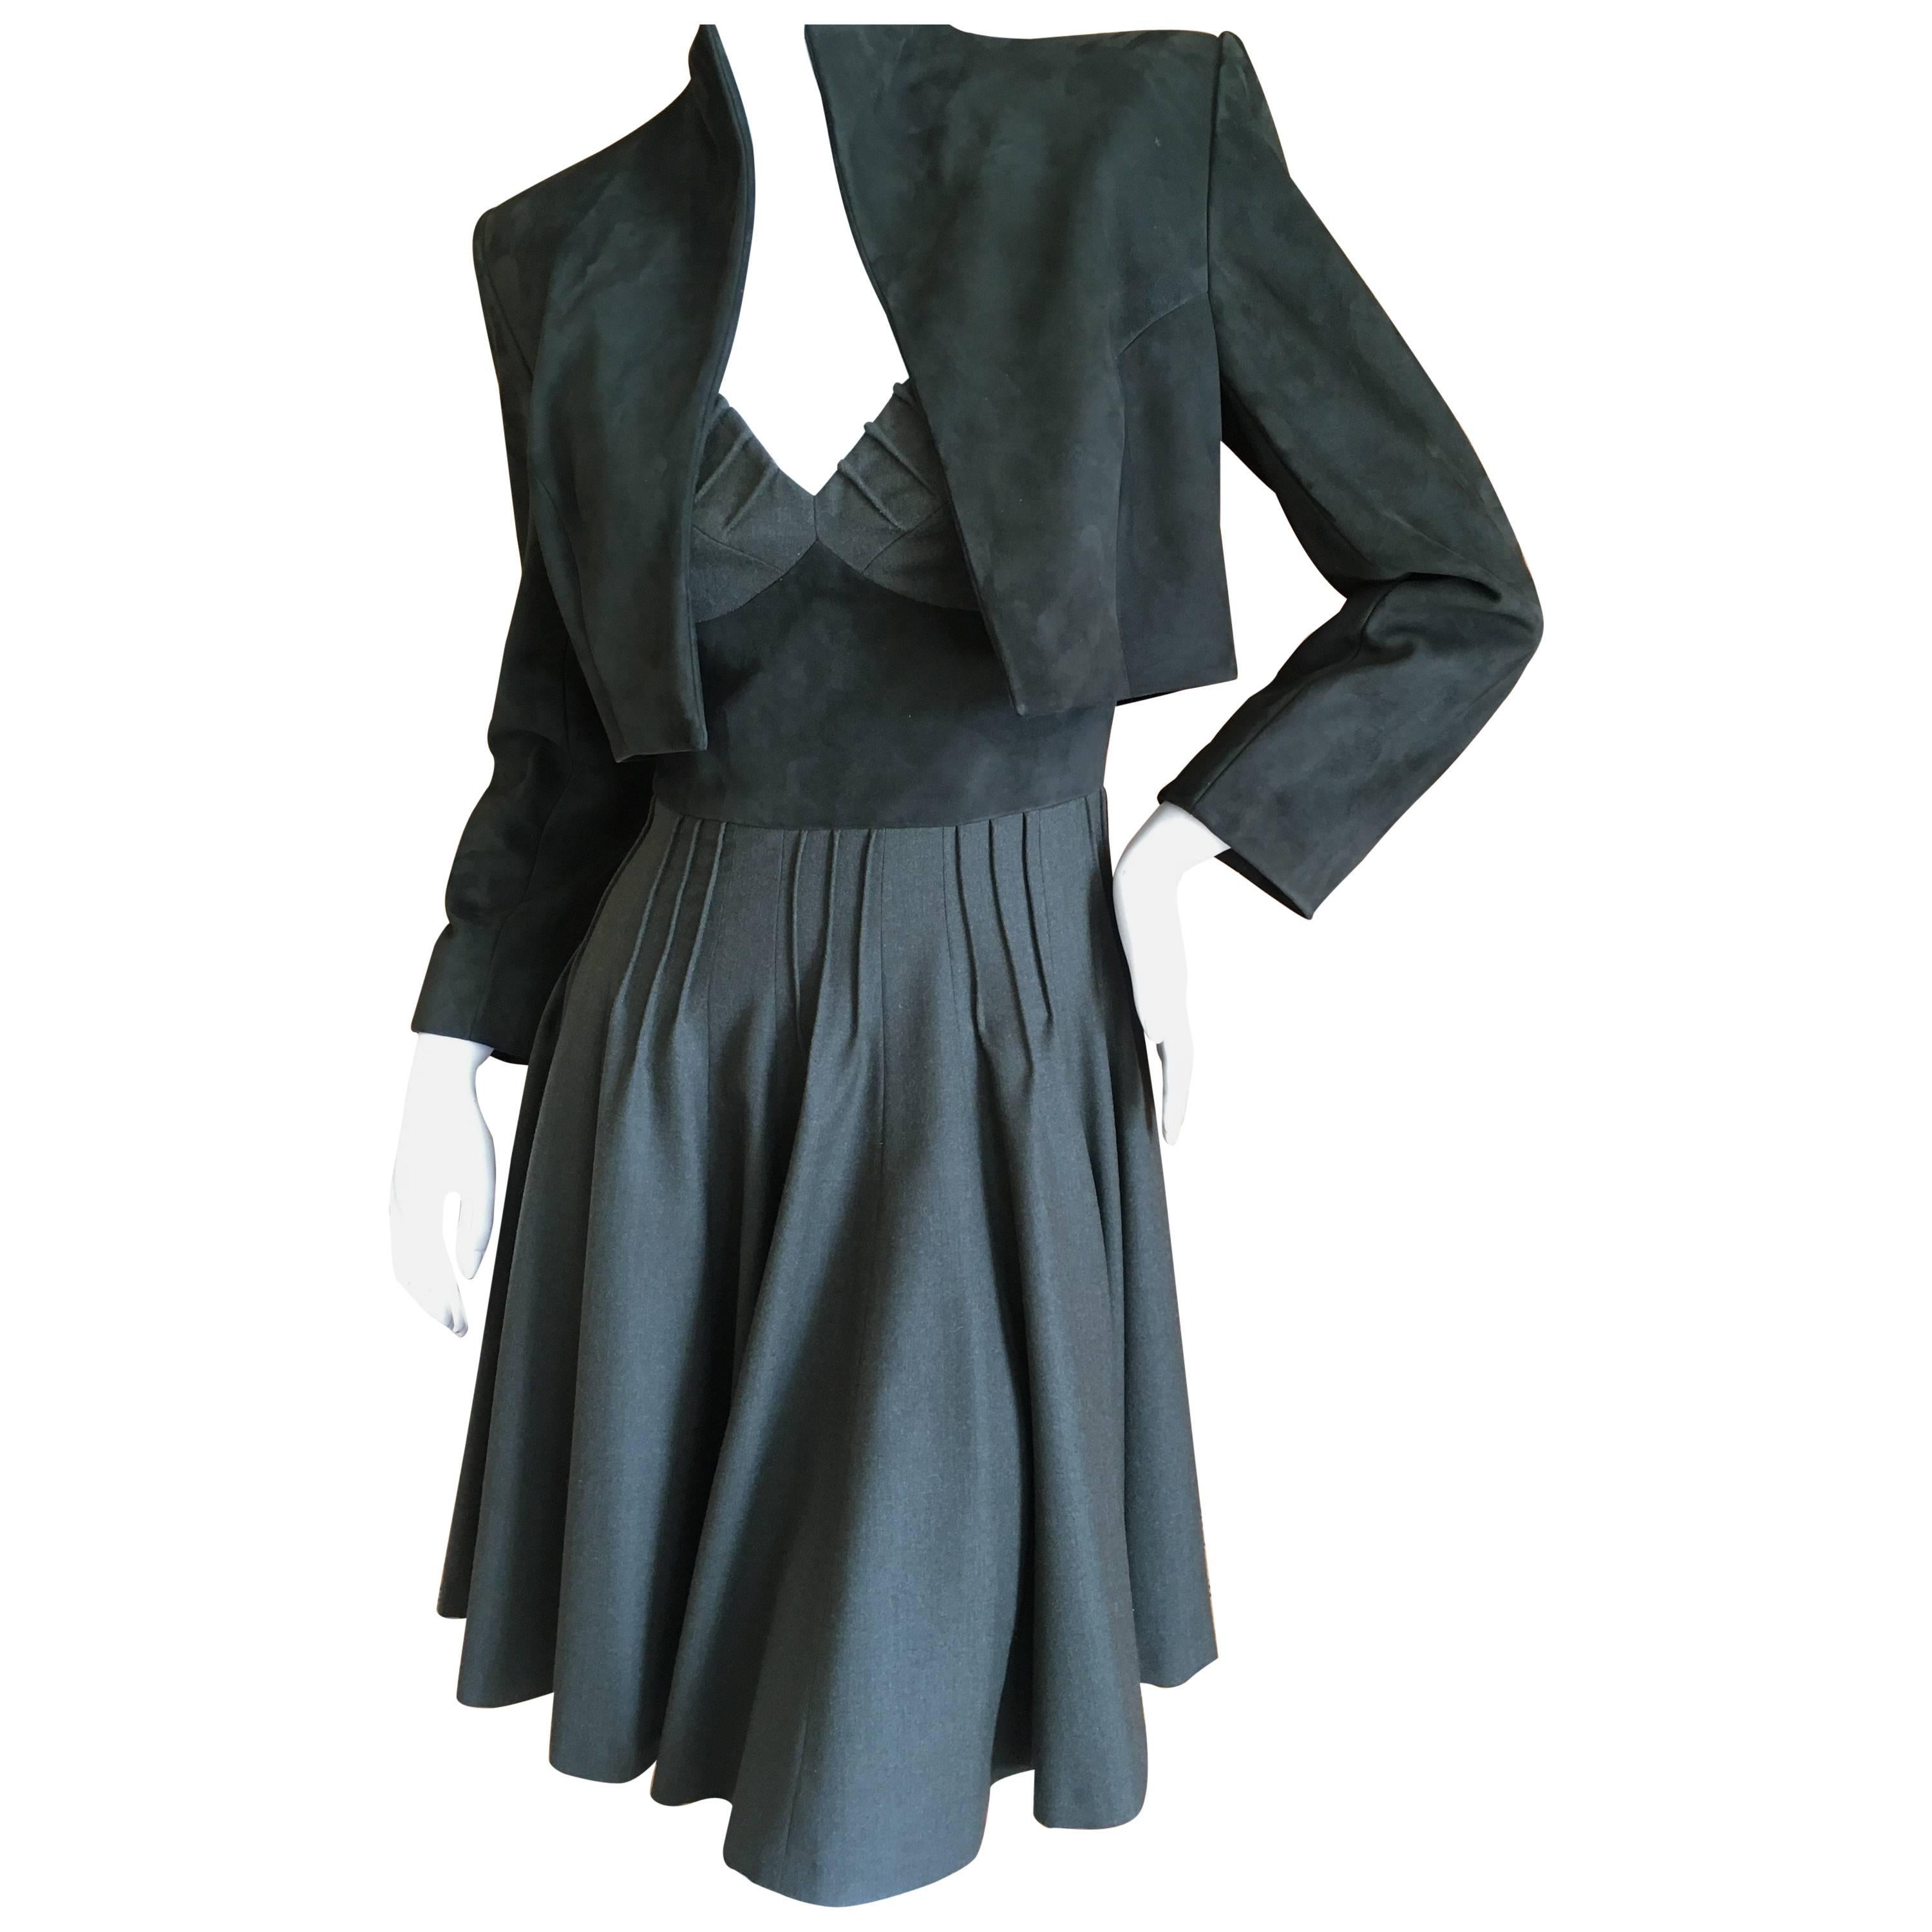 Rubin Singer Tyrollean Inspired Dress and Jacket For Sale